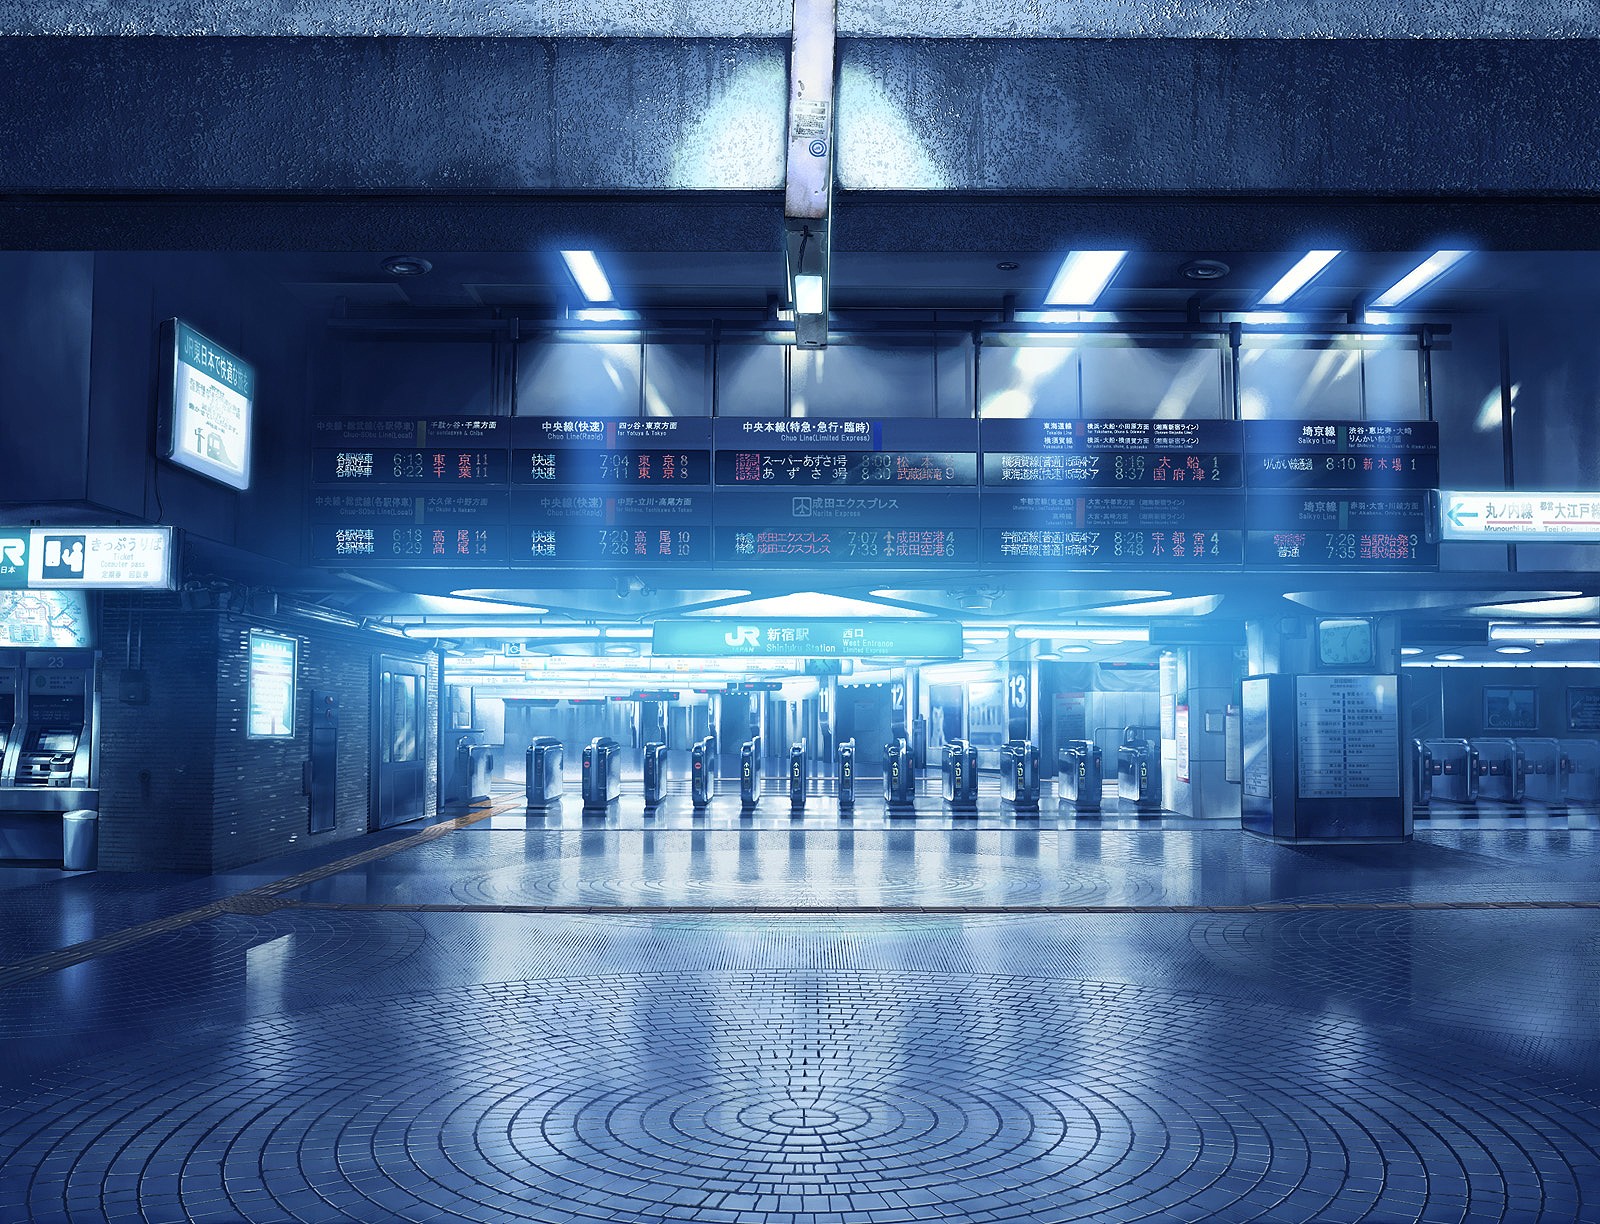 General 1600x1224 subway Japan Asia numbers city blue Makoto Shinkai  5 Centimeters Per Second